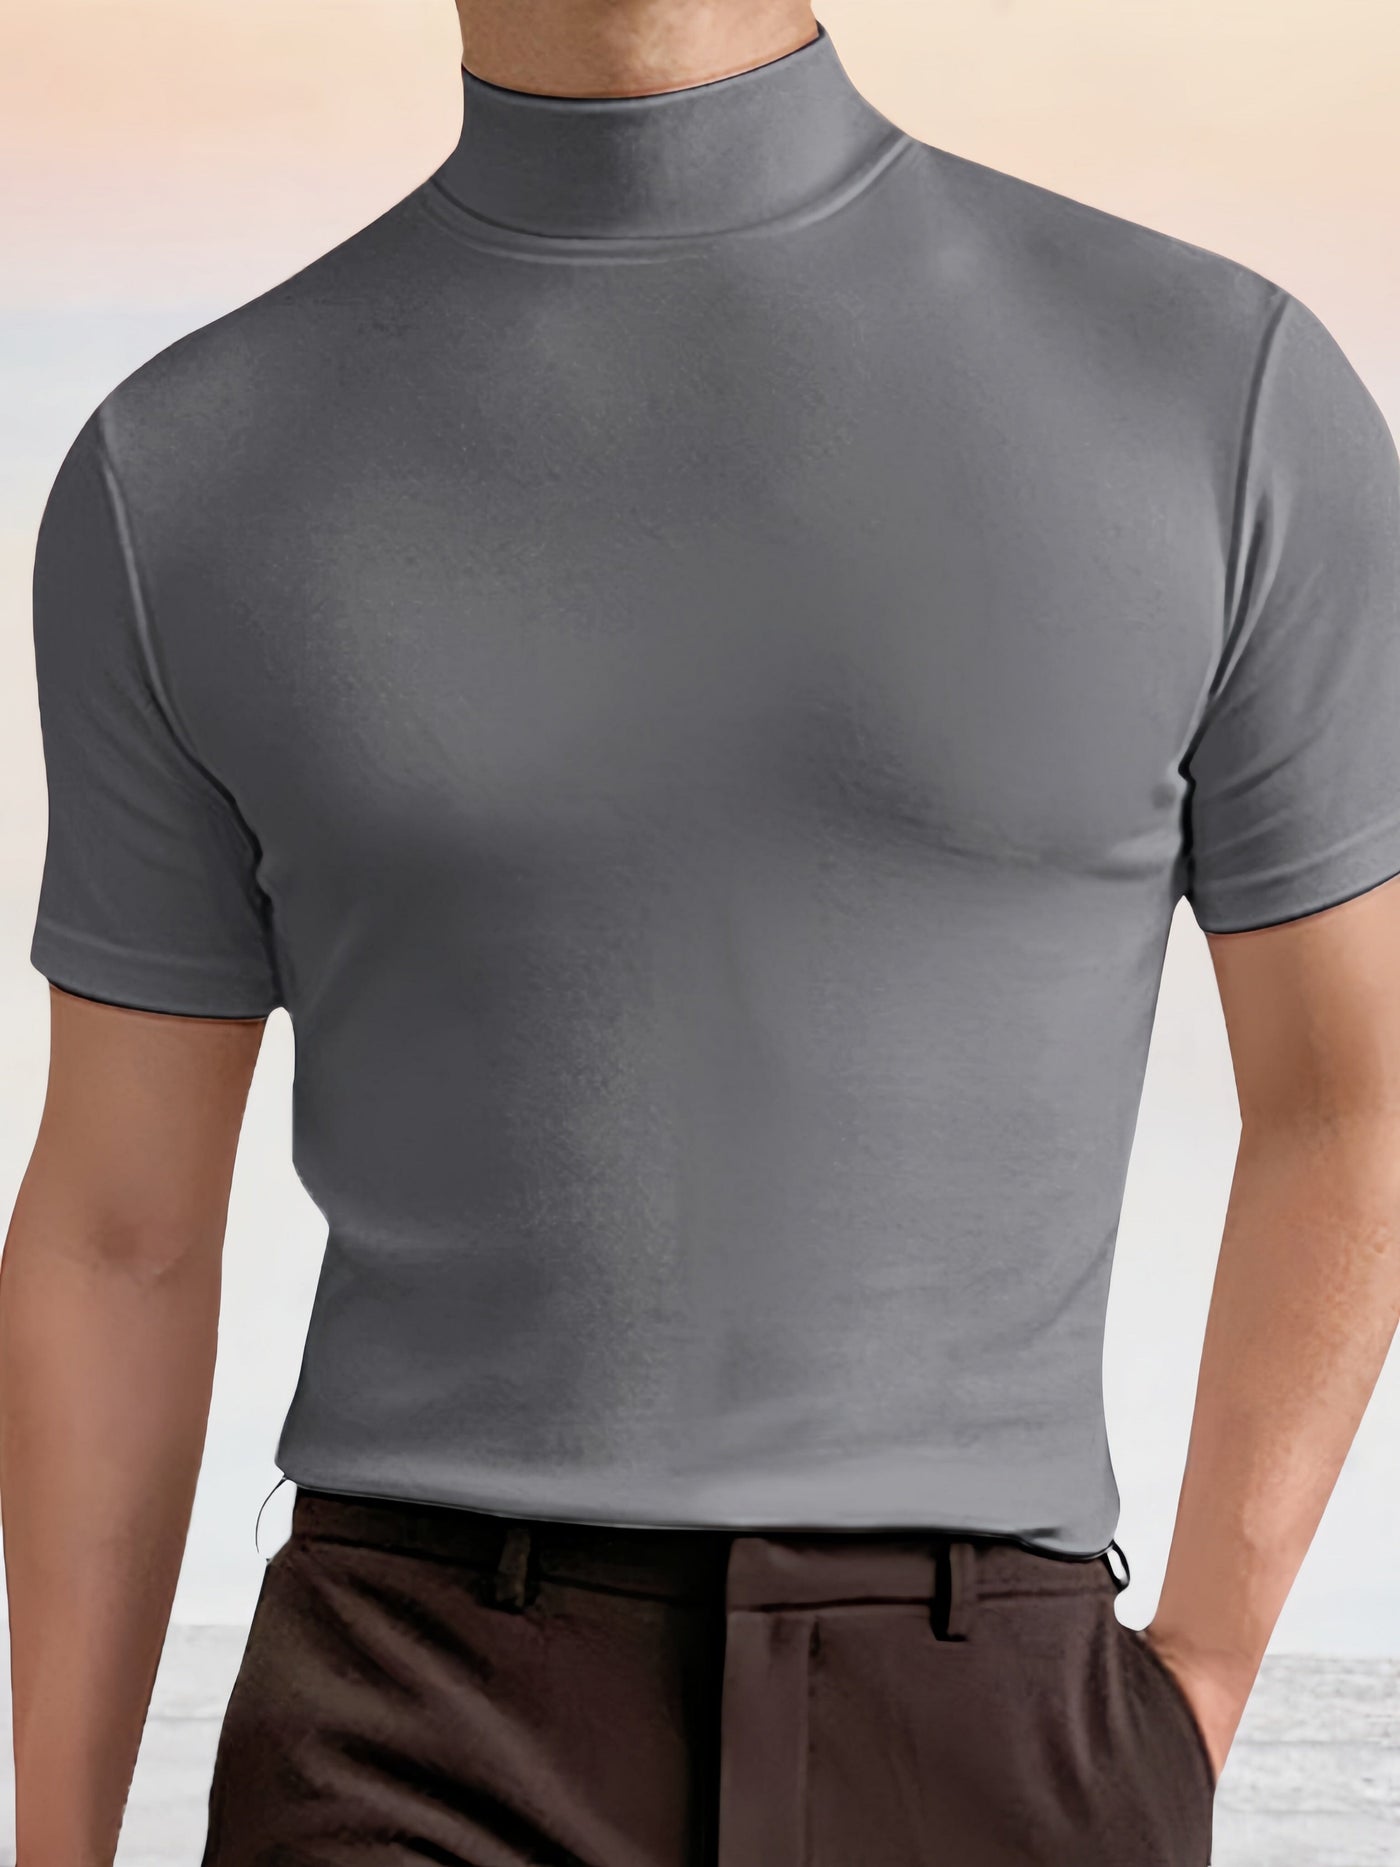 Slim Fit Short Sleeve Turtleneck Top Shirts coofandystore Grey S 